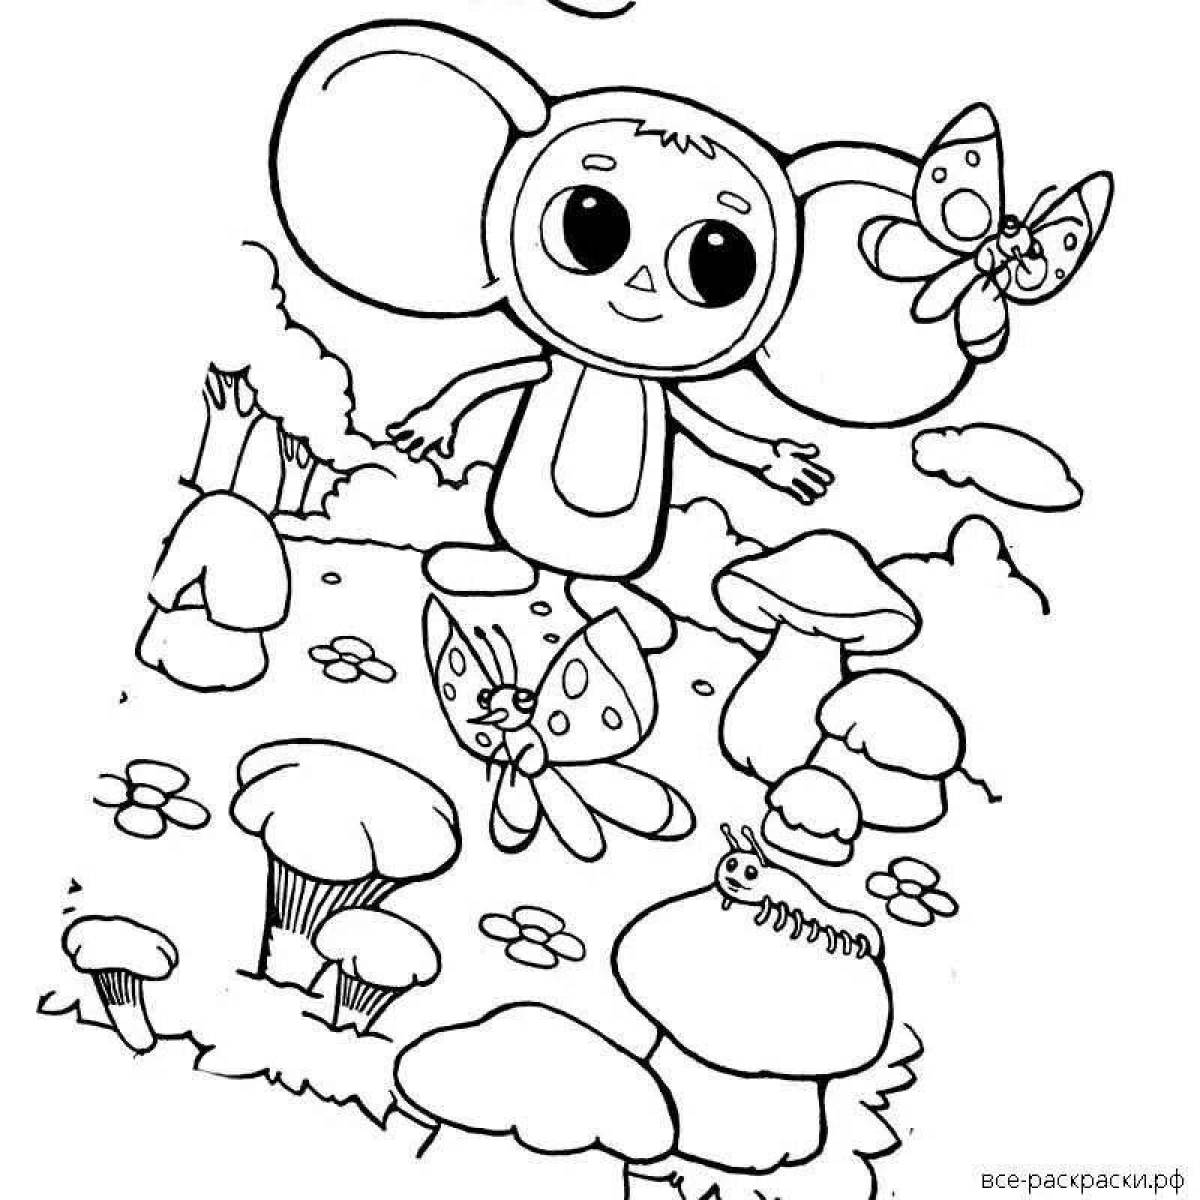 Smart drawing of cheburashka